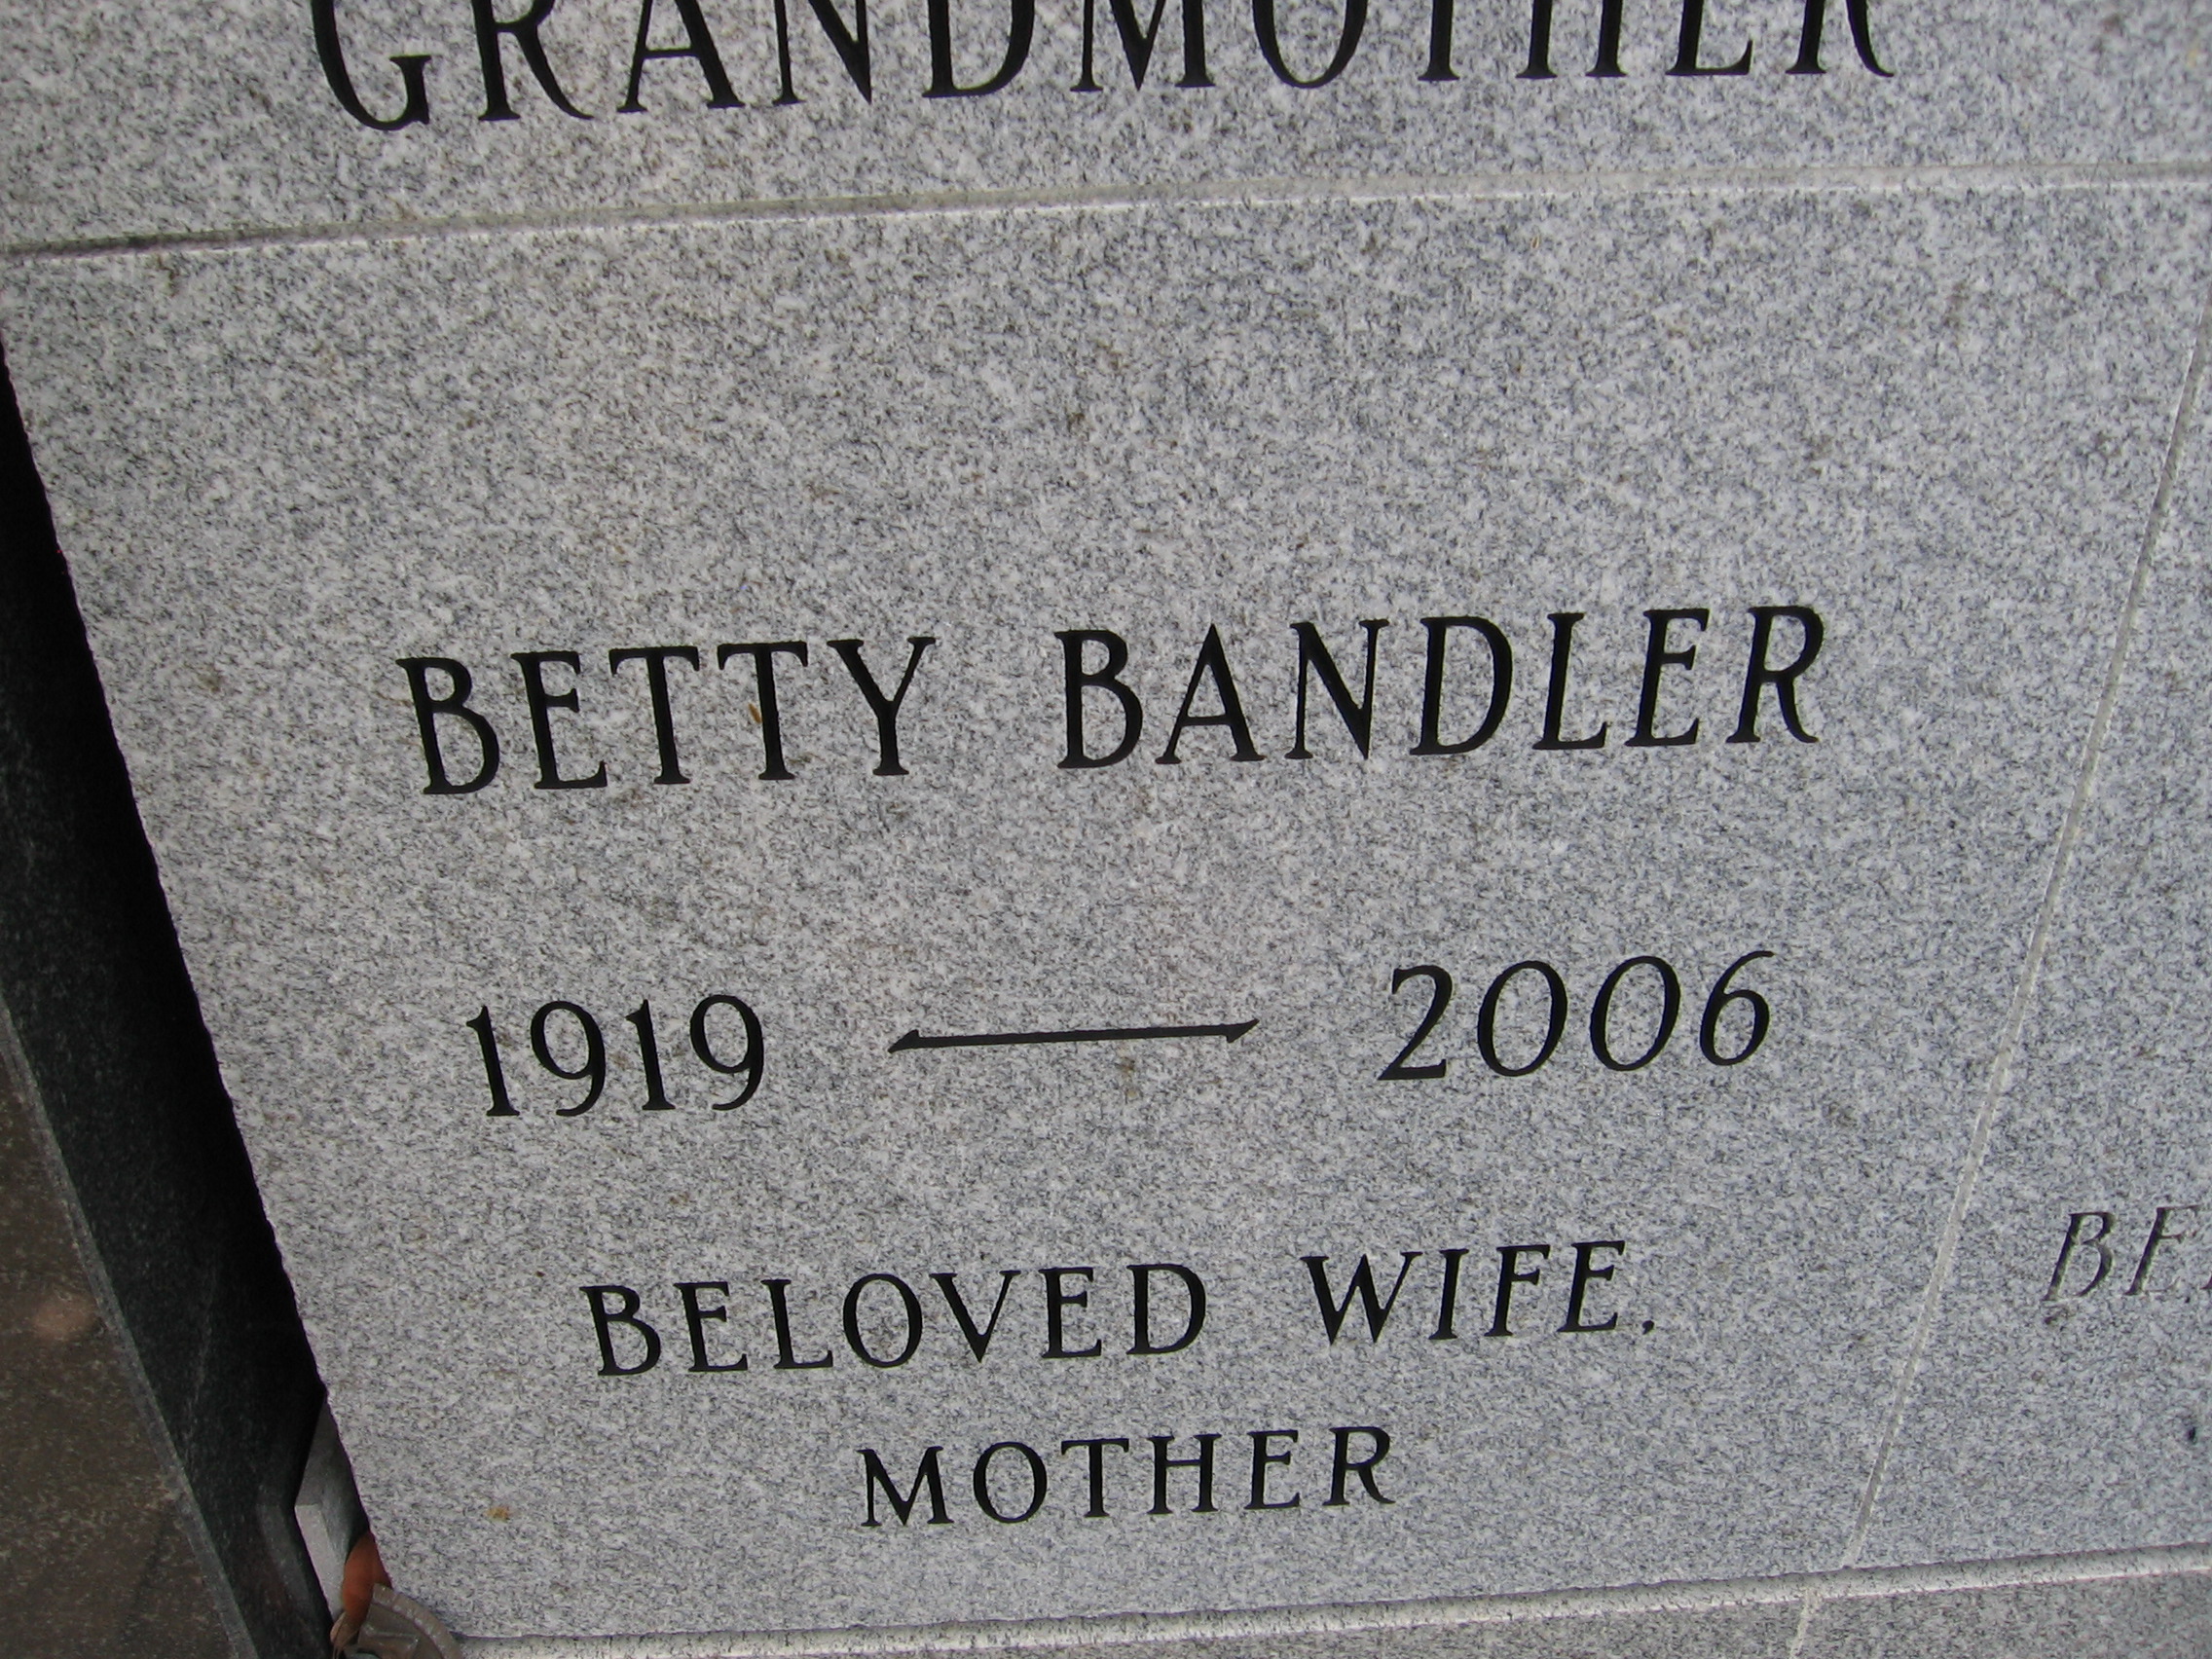 Betty Bandler